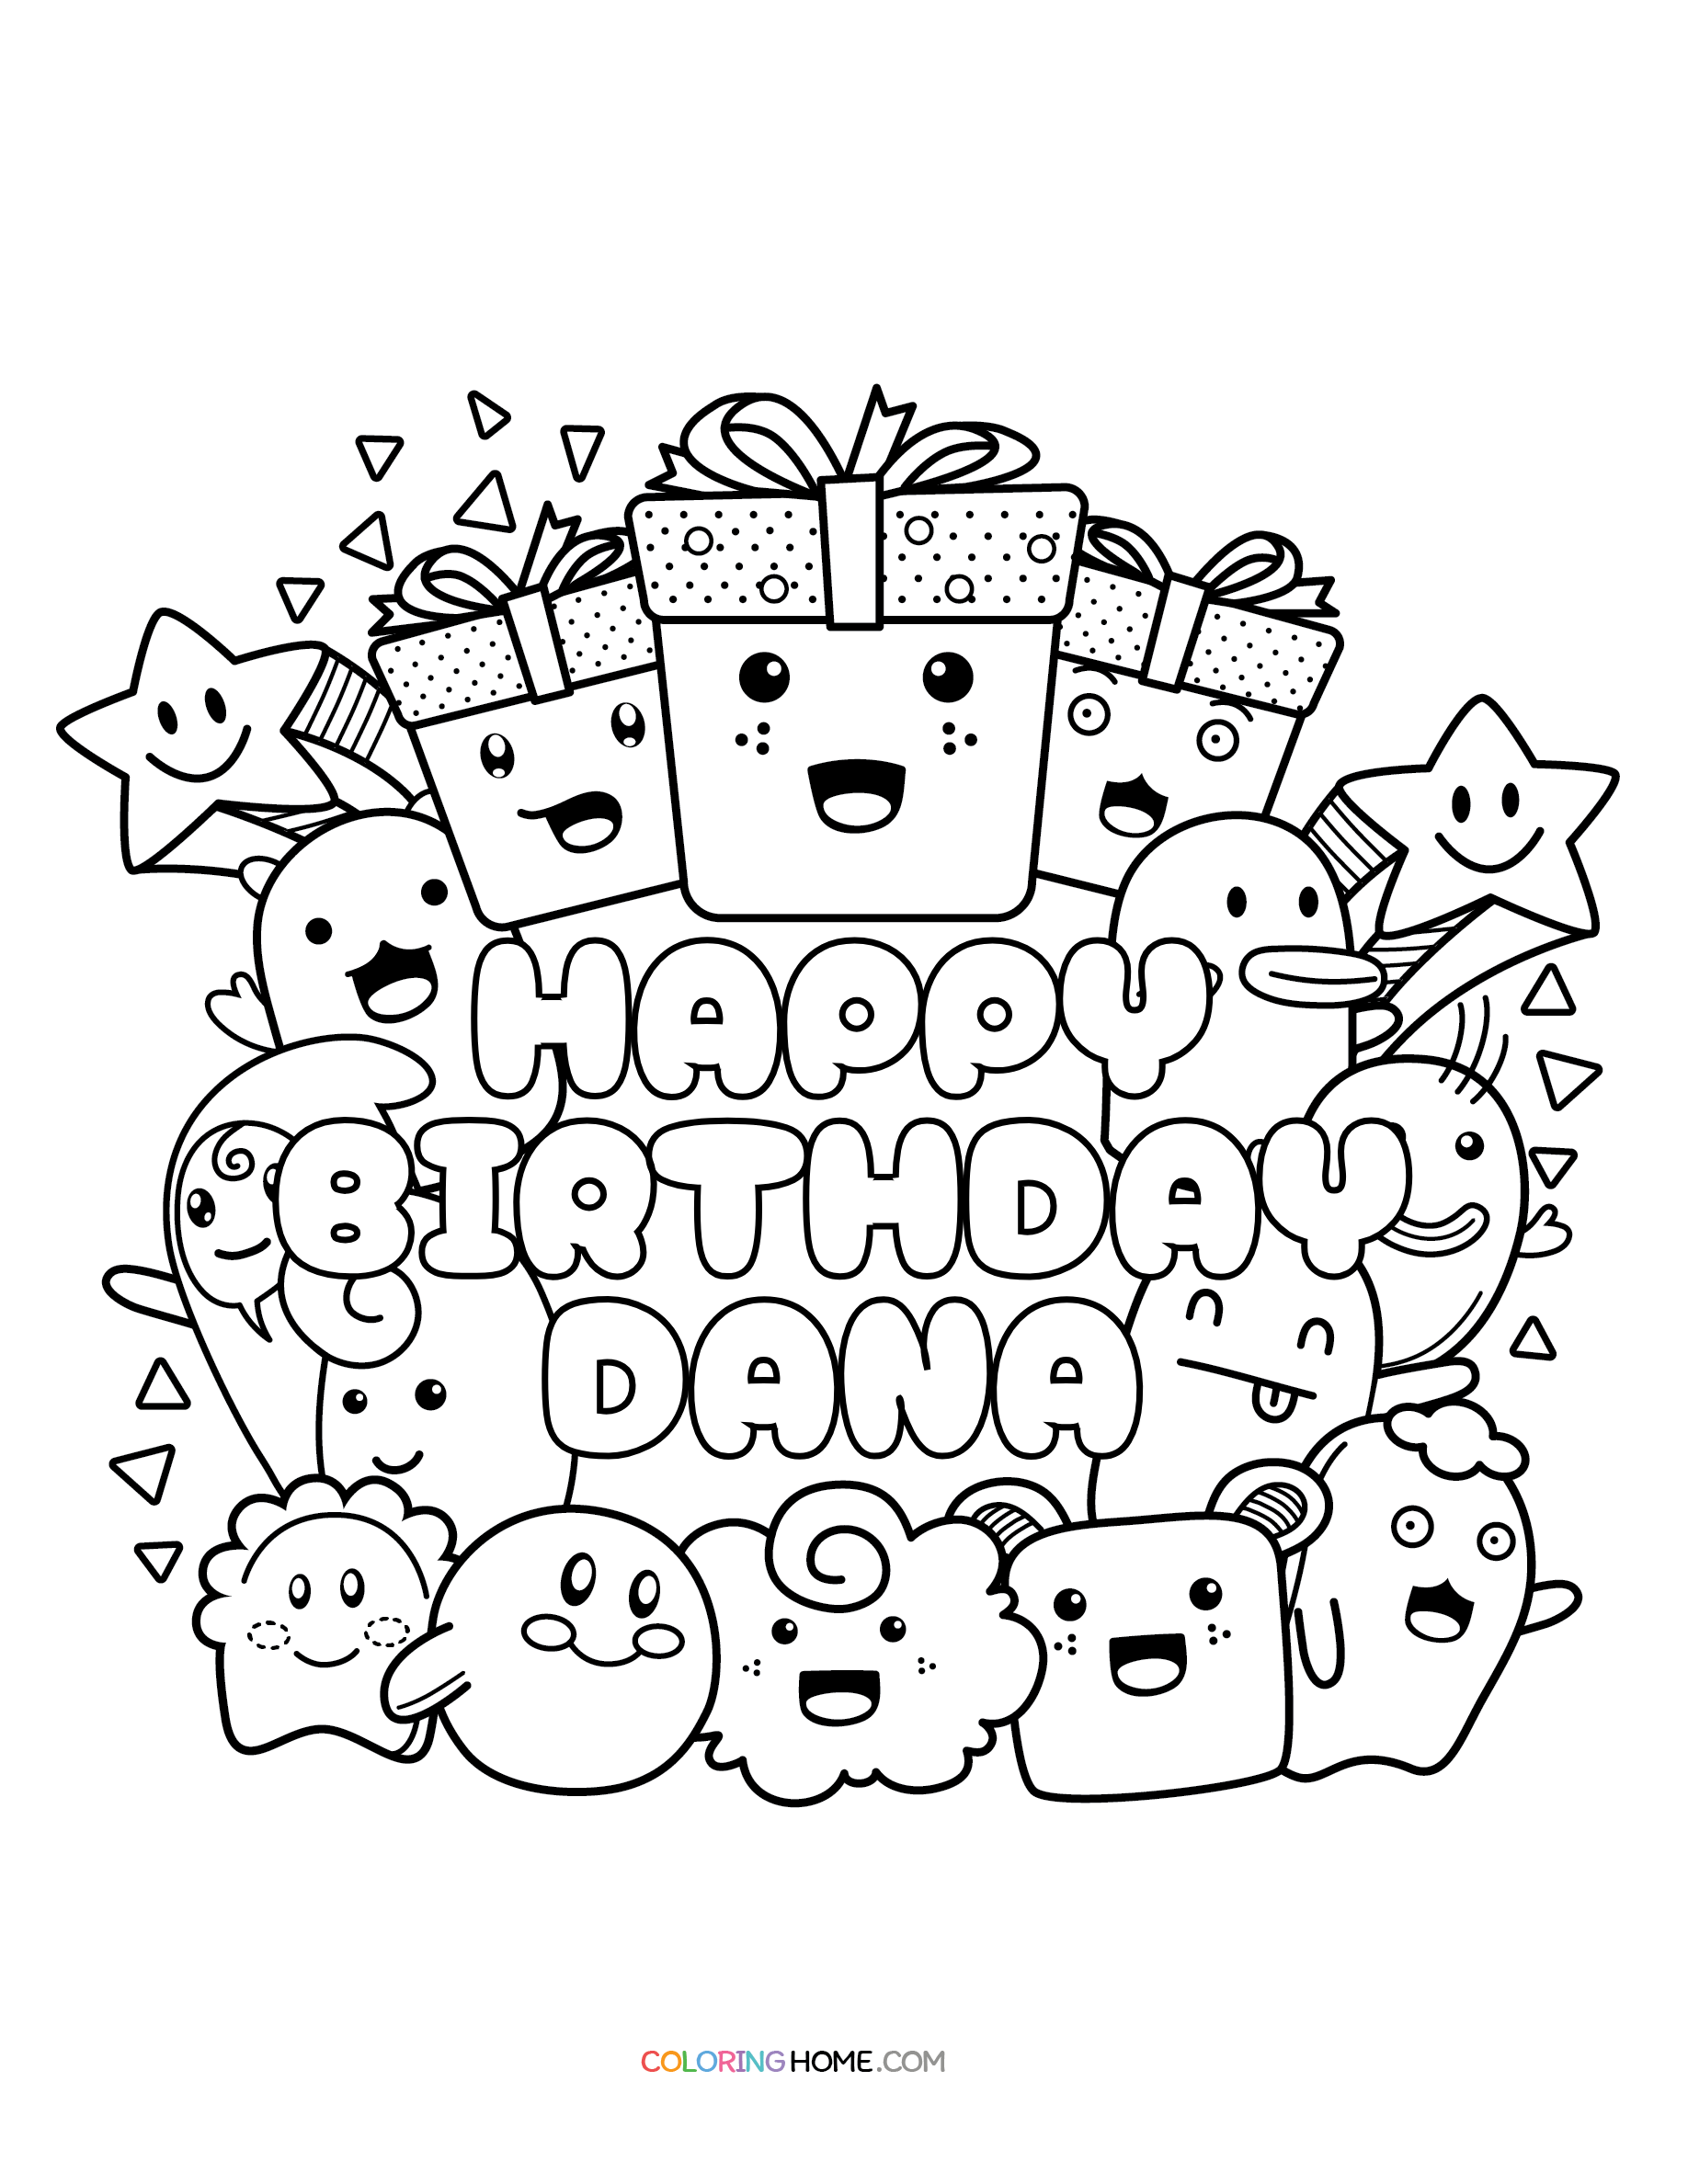 Happy Birthday Dana coloring page